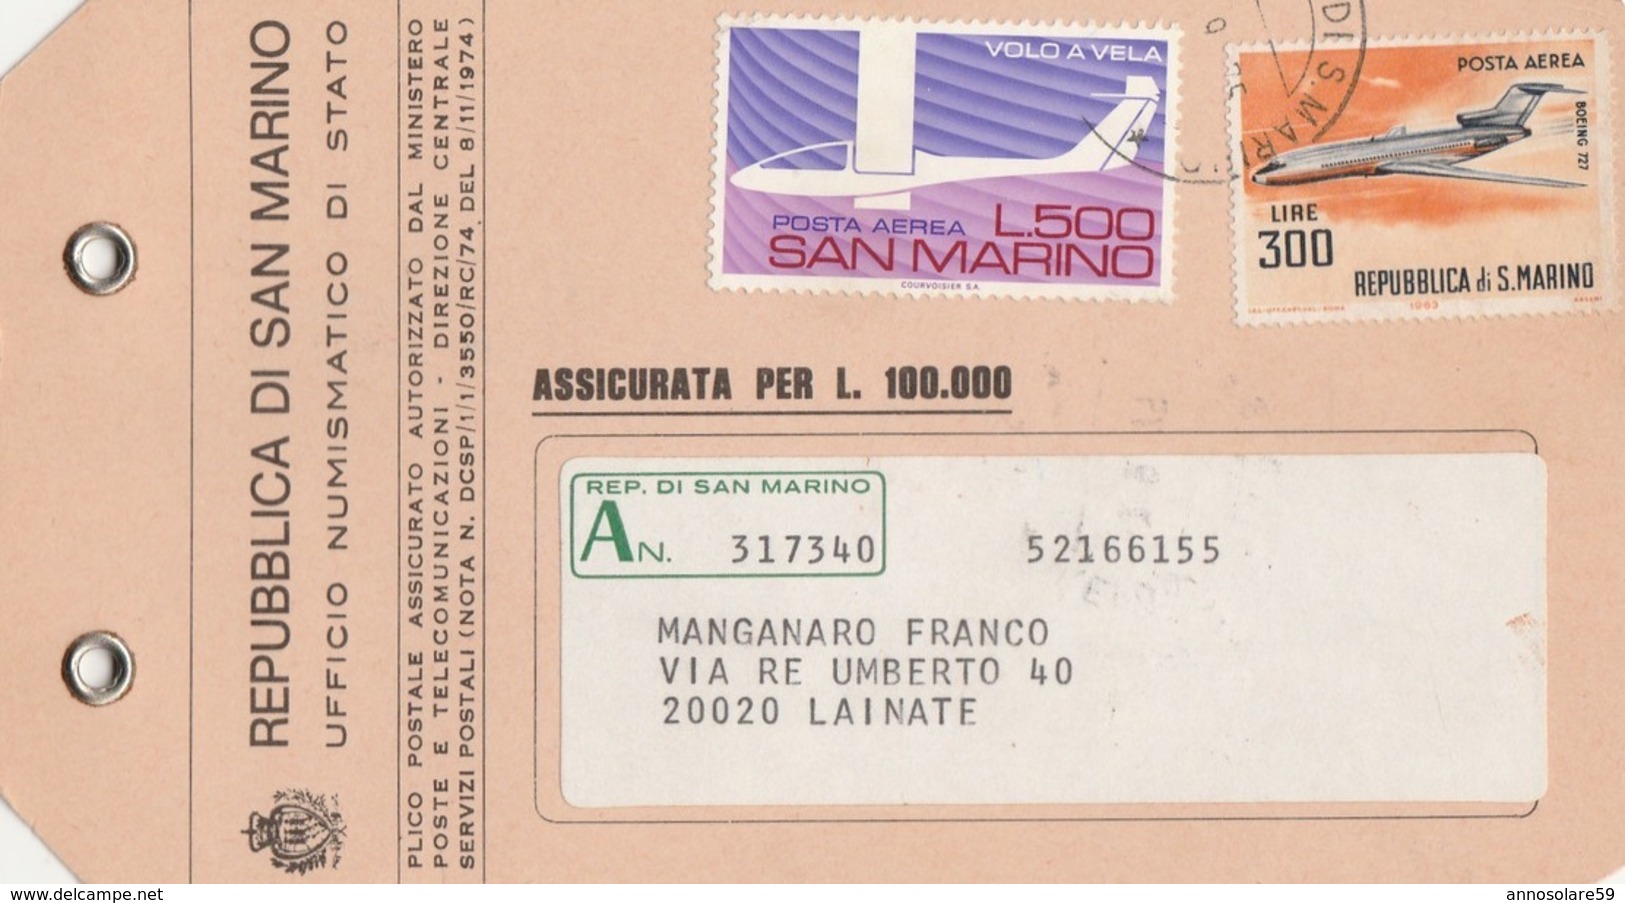 AIRPLANES - SAN MARINO - STORIA POSTALE - ETICHETTA PLICCO POSTALE - BELLISSIMA 1975 - LEGGI - Andere Verkehrsträger